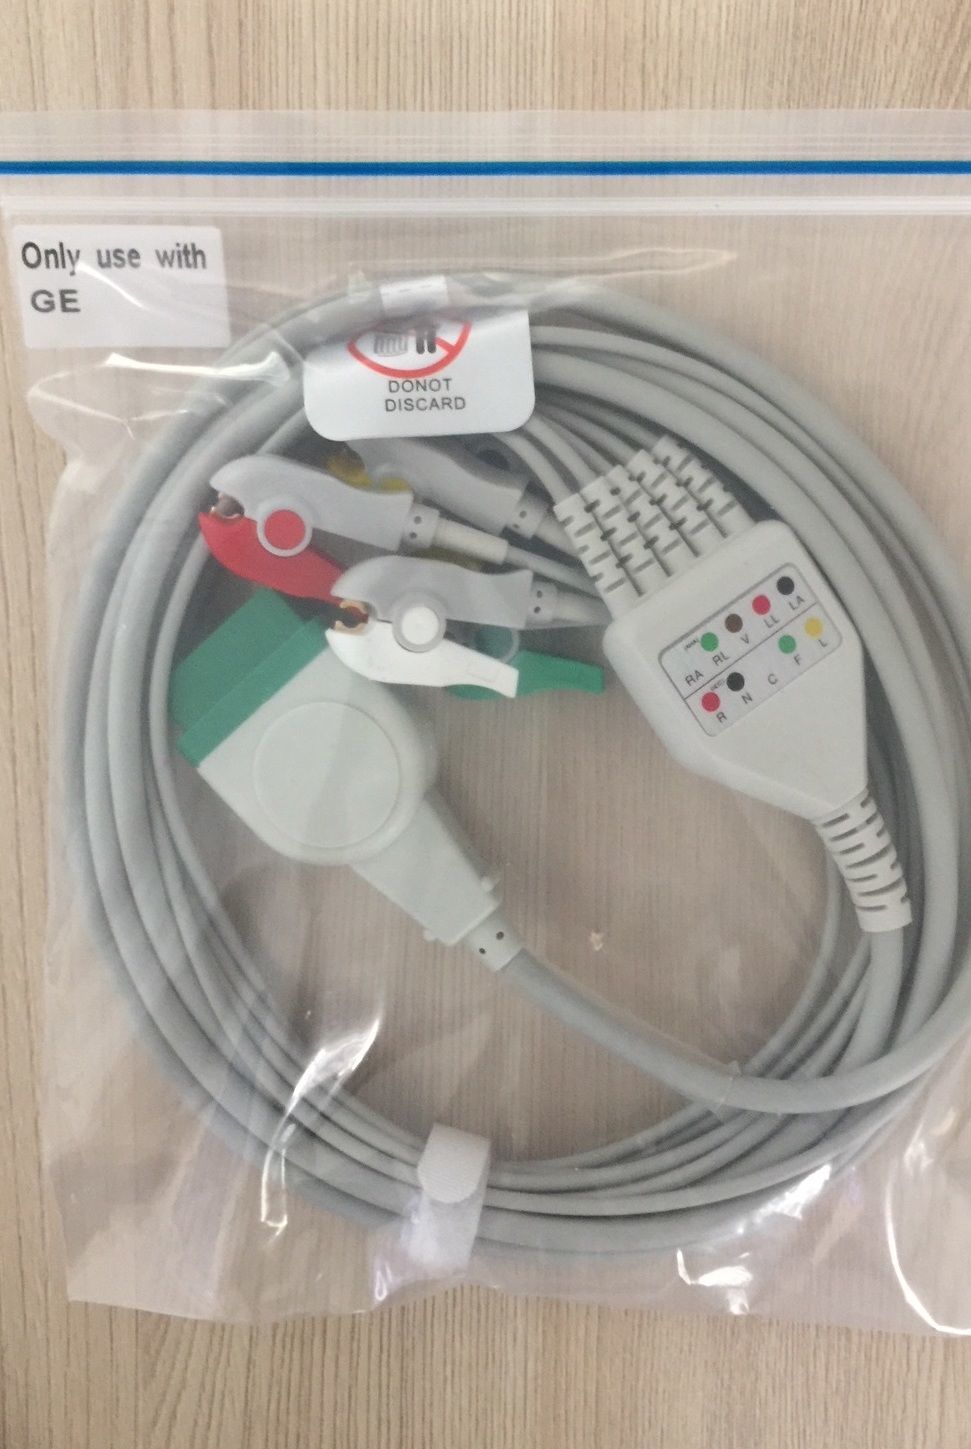 ECG 5 lead wires cable with grabber for GE Marquette_สายอีซีจีโพรบเคเบิ้ลแบบก้ามปูสำหรับเครื่องมอนิเตอร์ผู้ป่วย GE Marquette